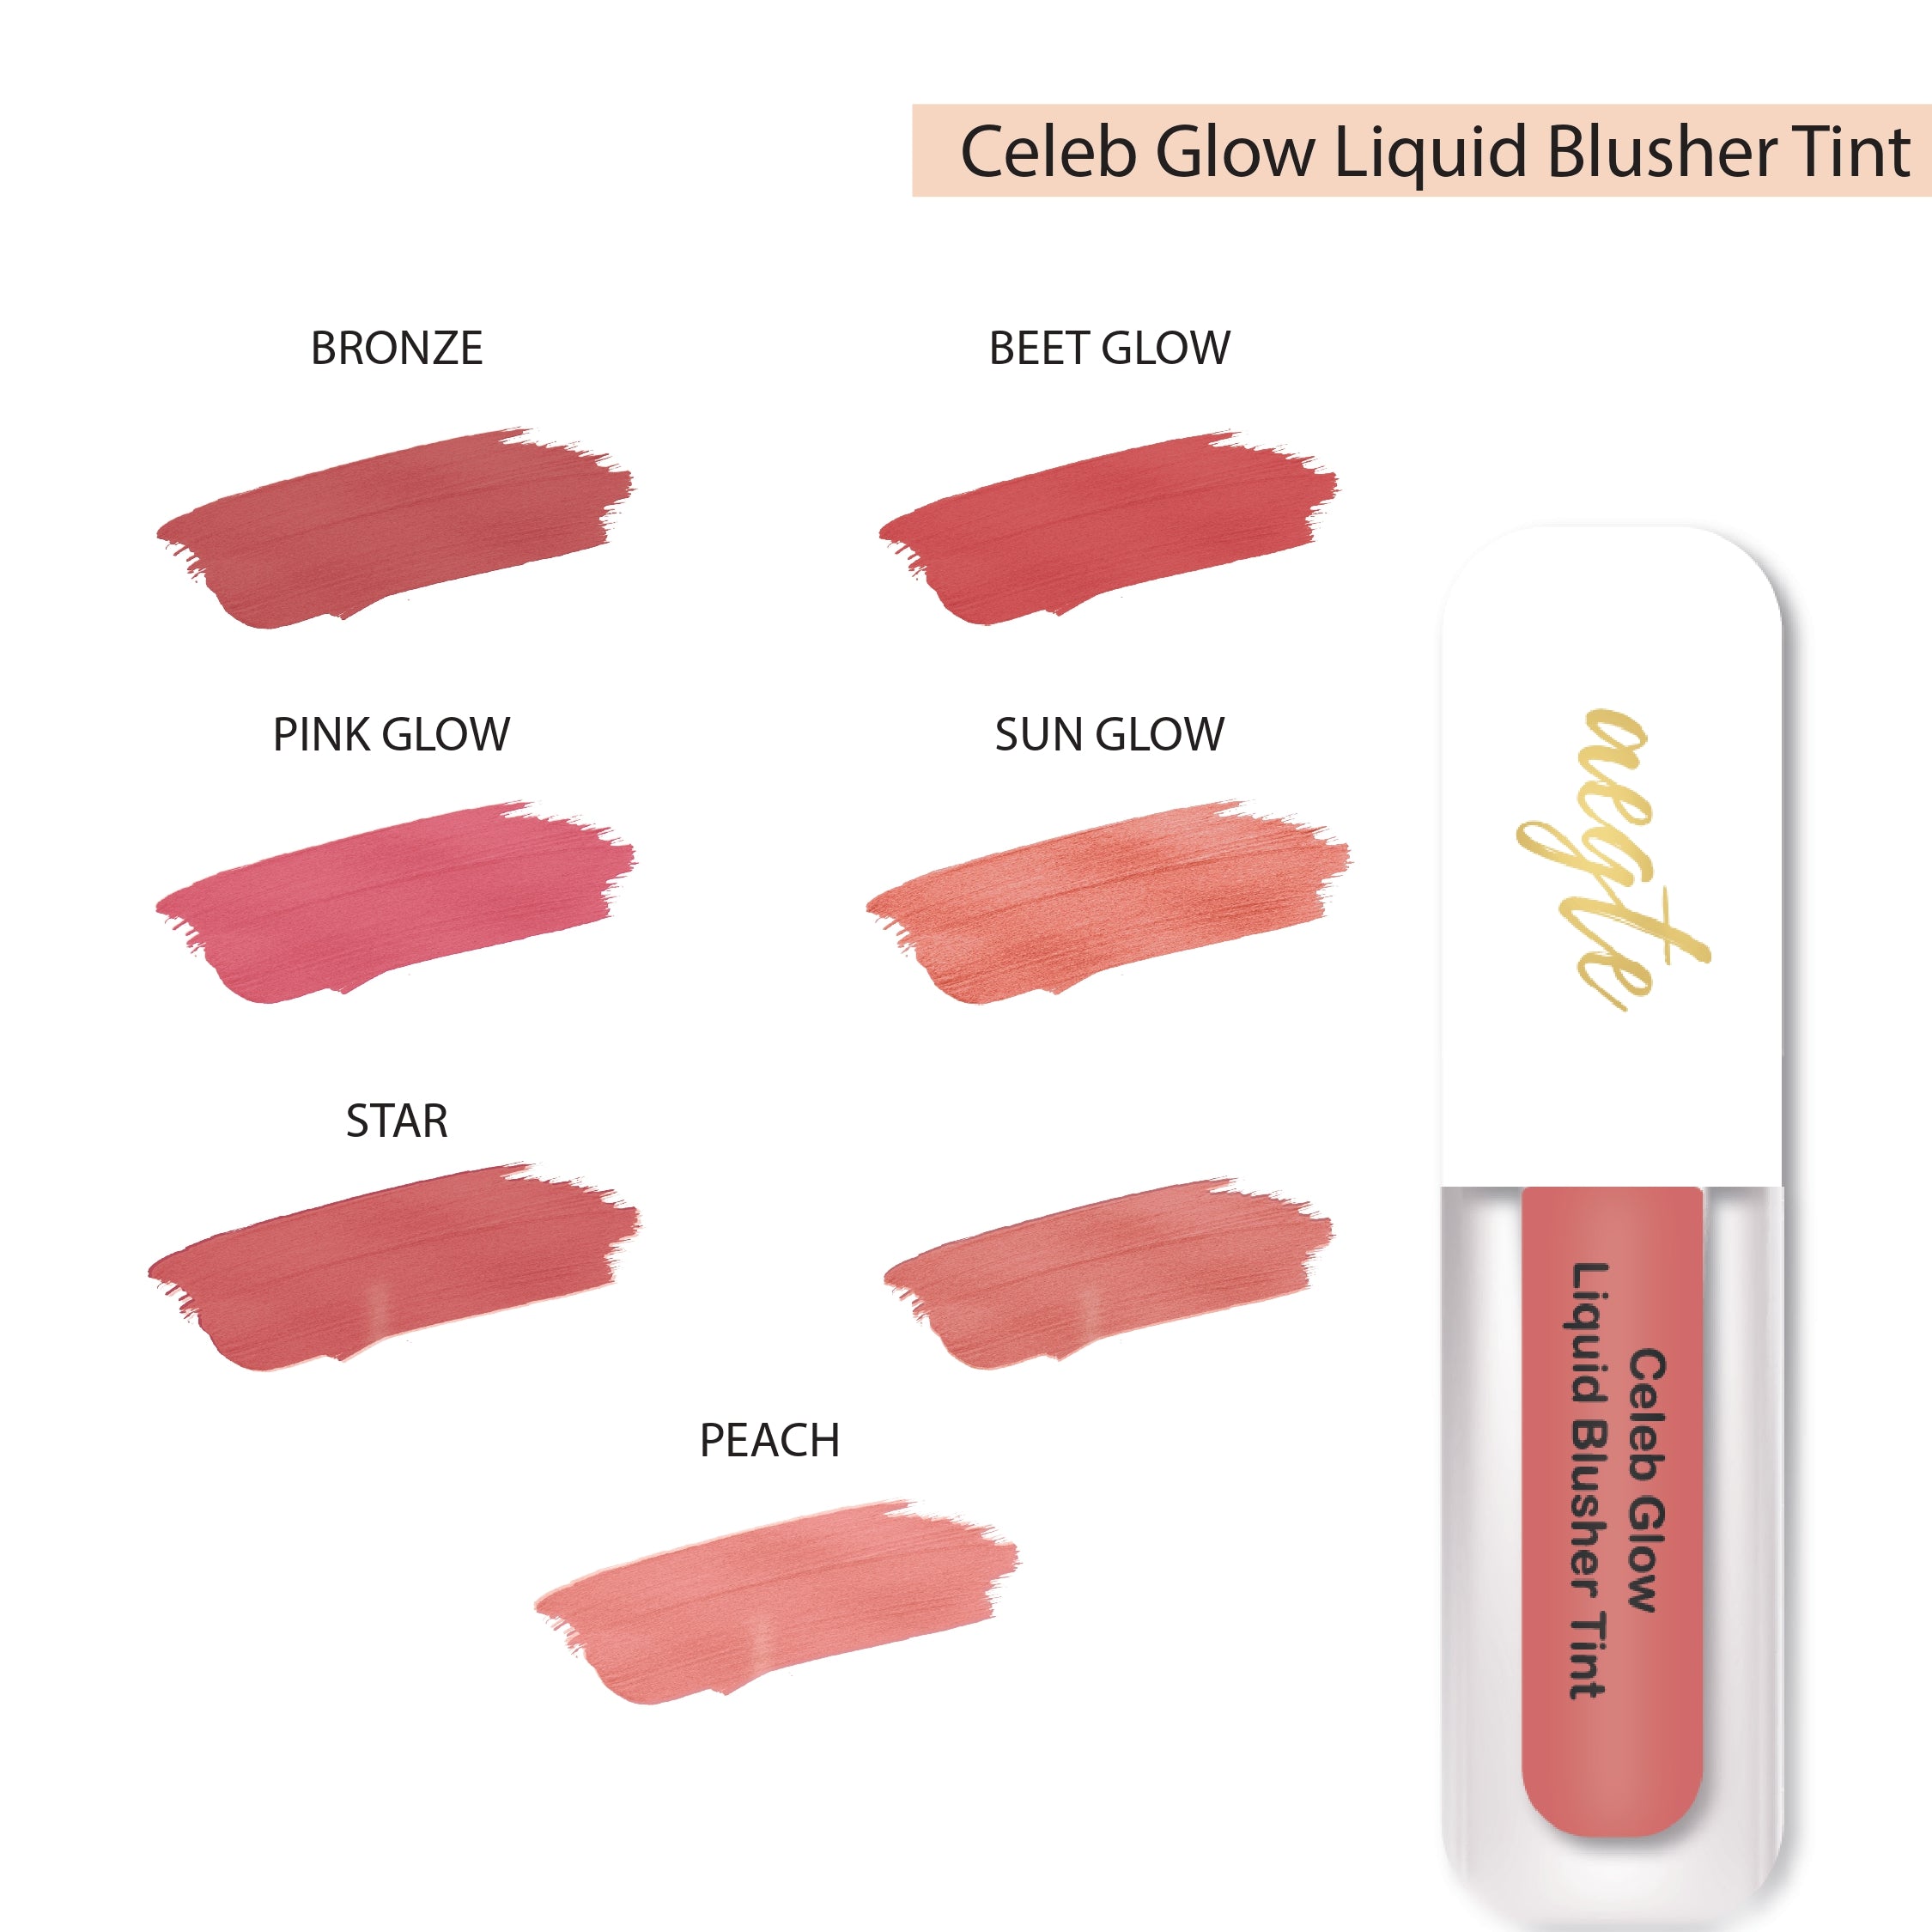 Aegte 3D Lumi Strobe Cream + Celeb Glow Liquid Blusher Tint + Glass Skin HD Foundation